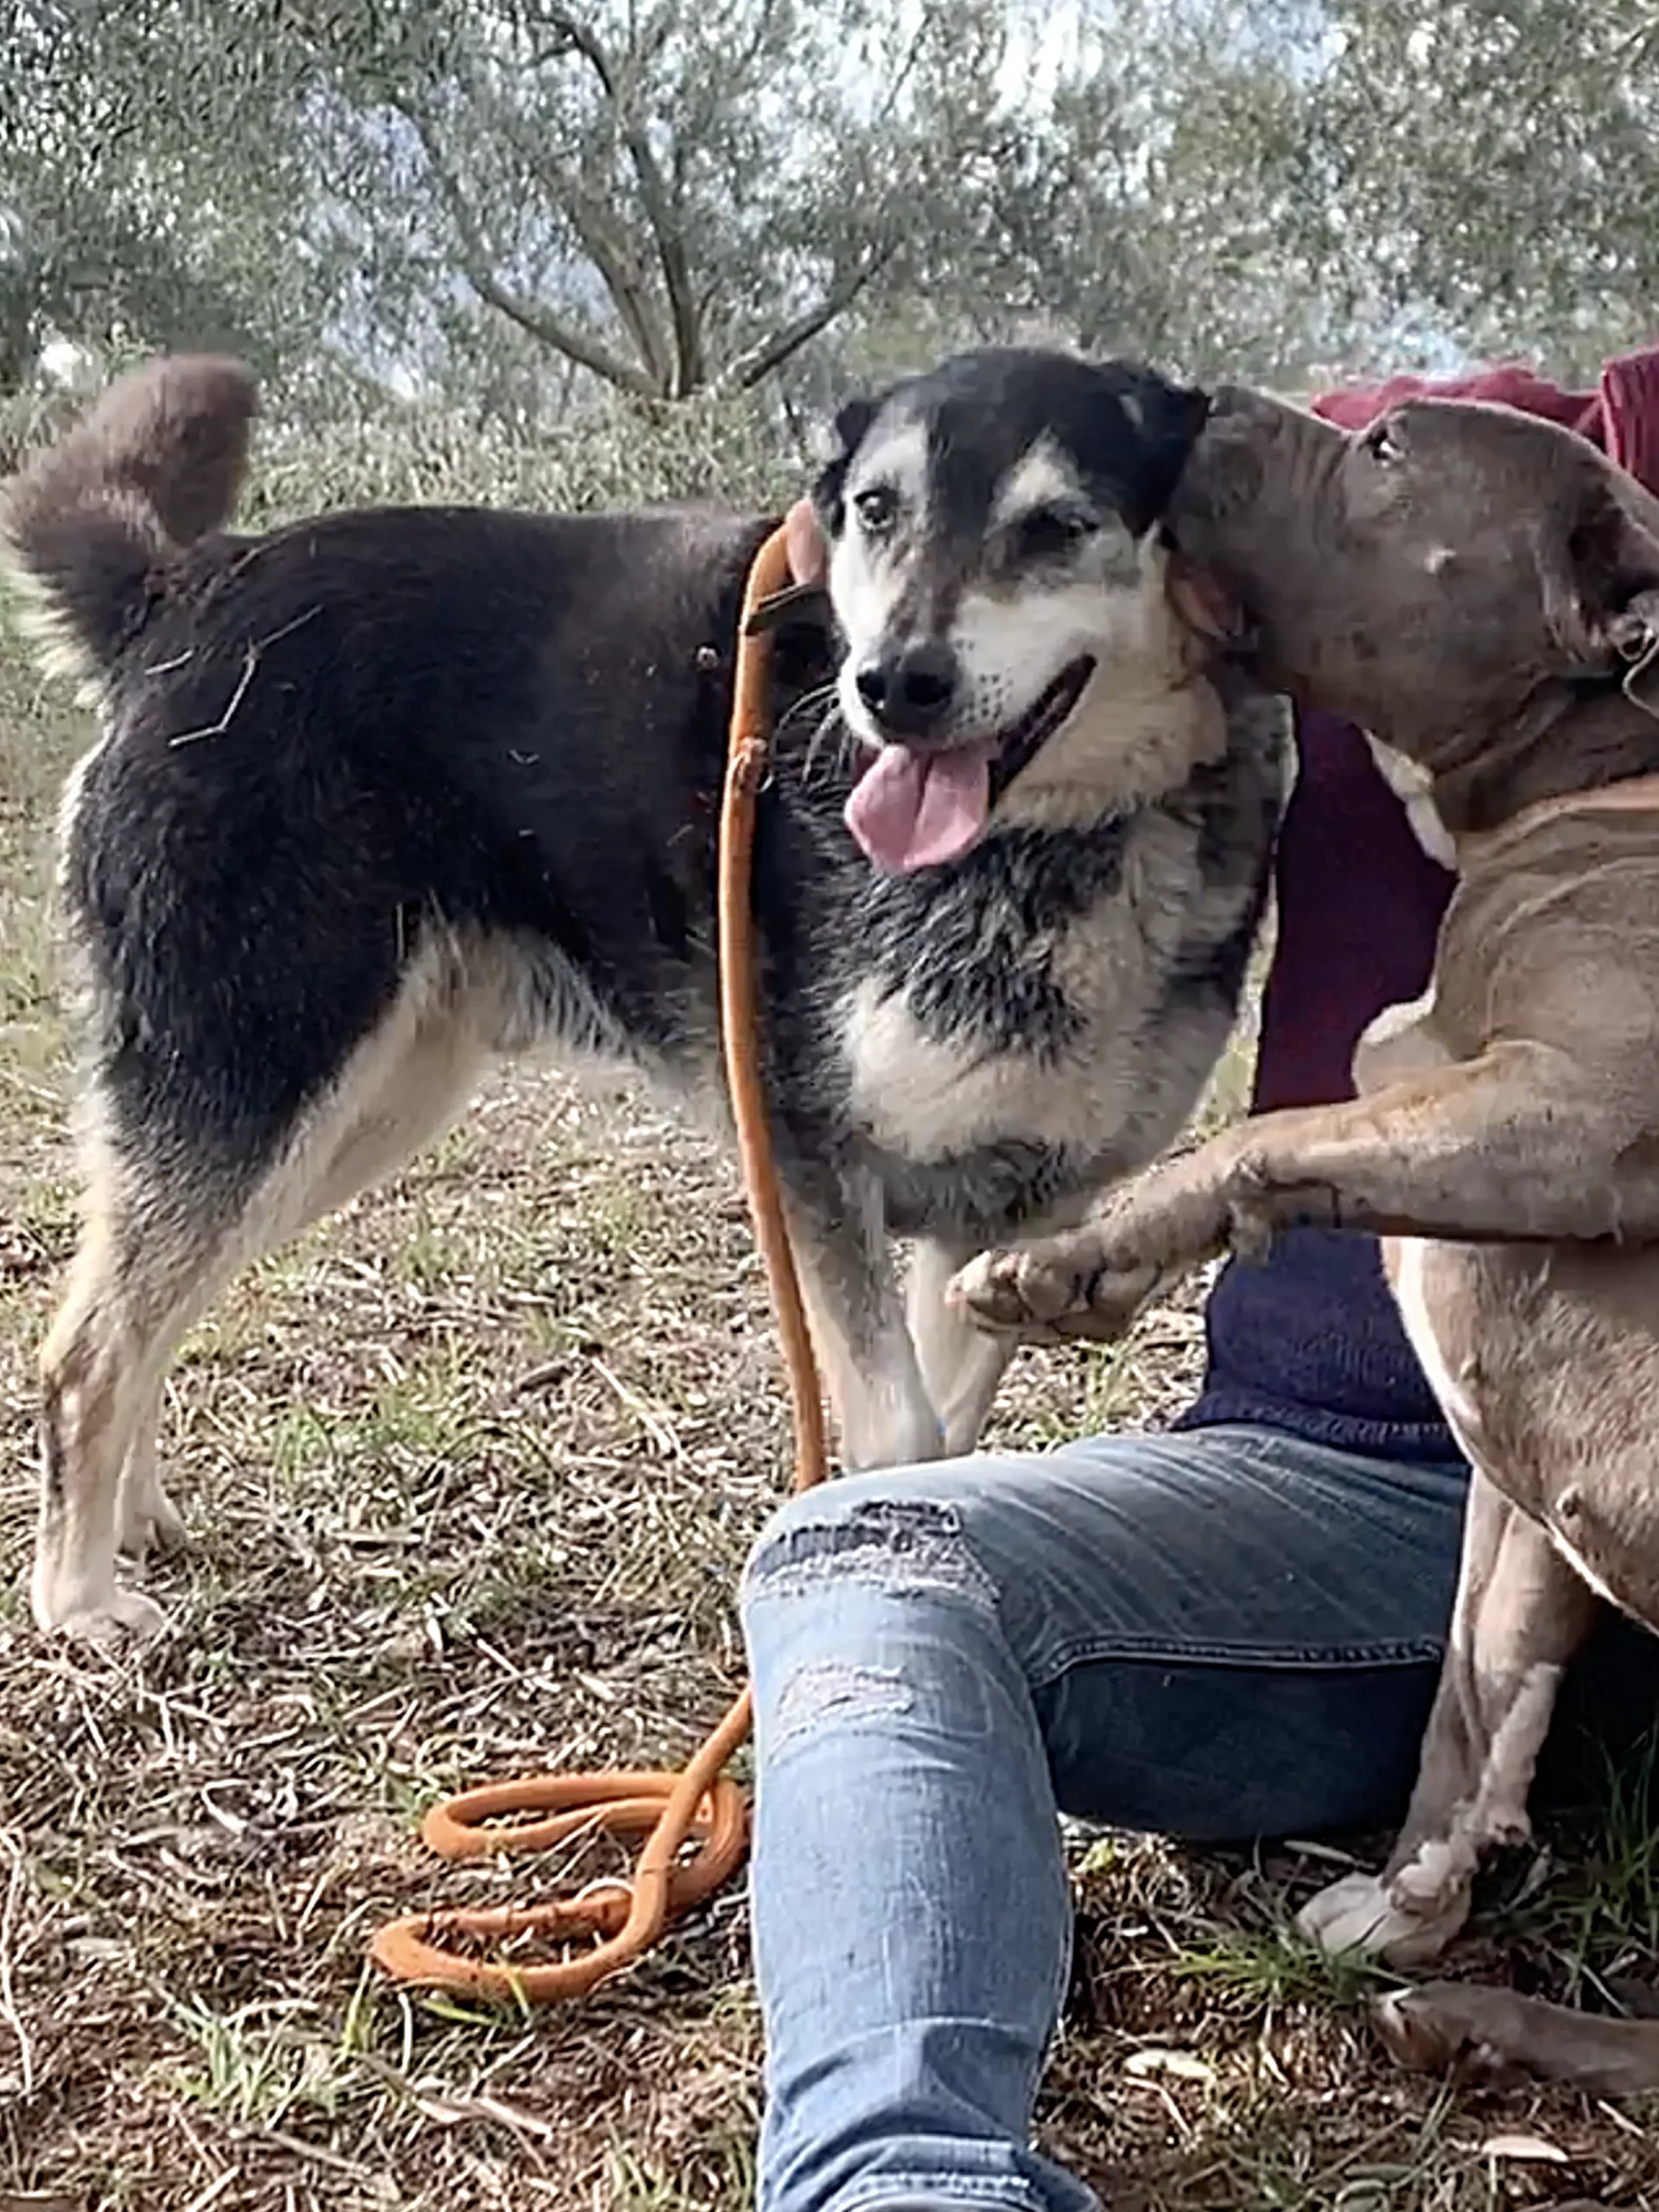 Grand chien adoption - Rocky - Les Amis de Sam - Aix en Provence